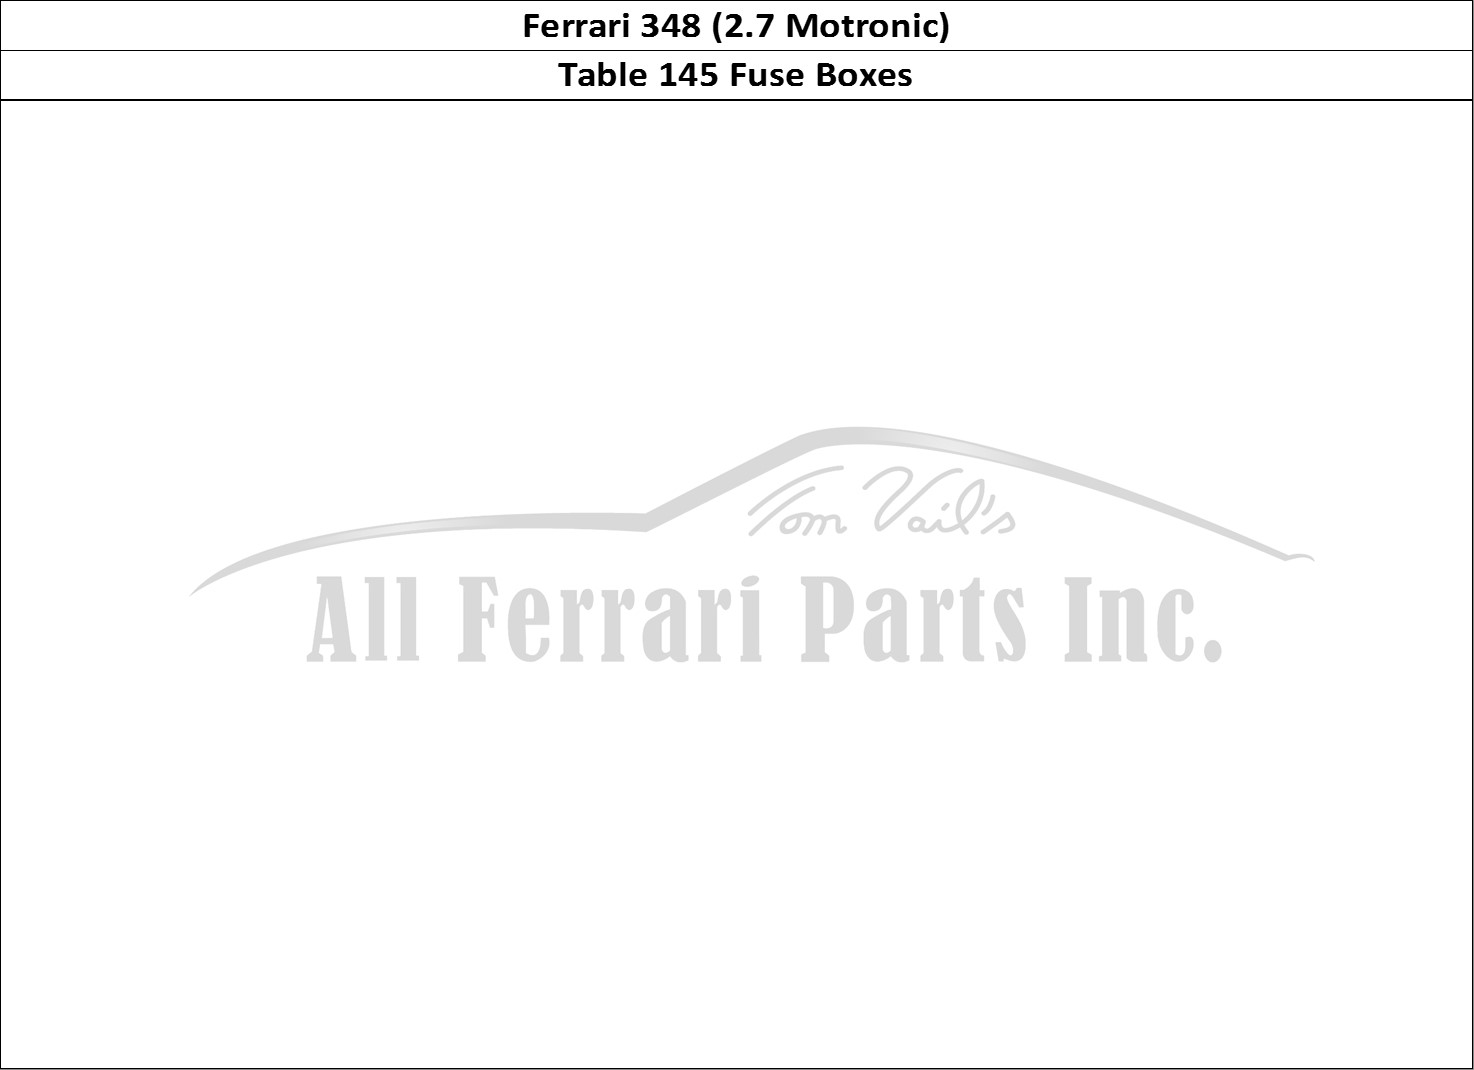 Ferrari Parts Ferrari 348 (2.7 Motronic) Page 145 Electrical Boards